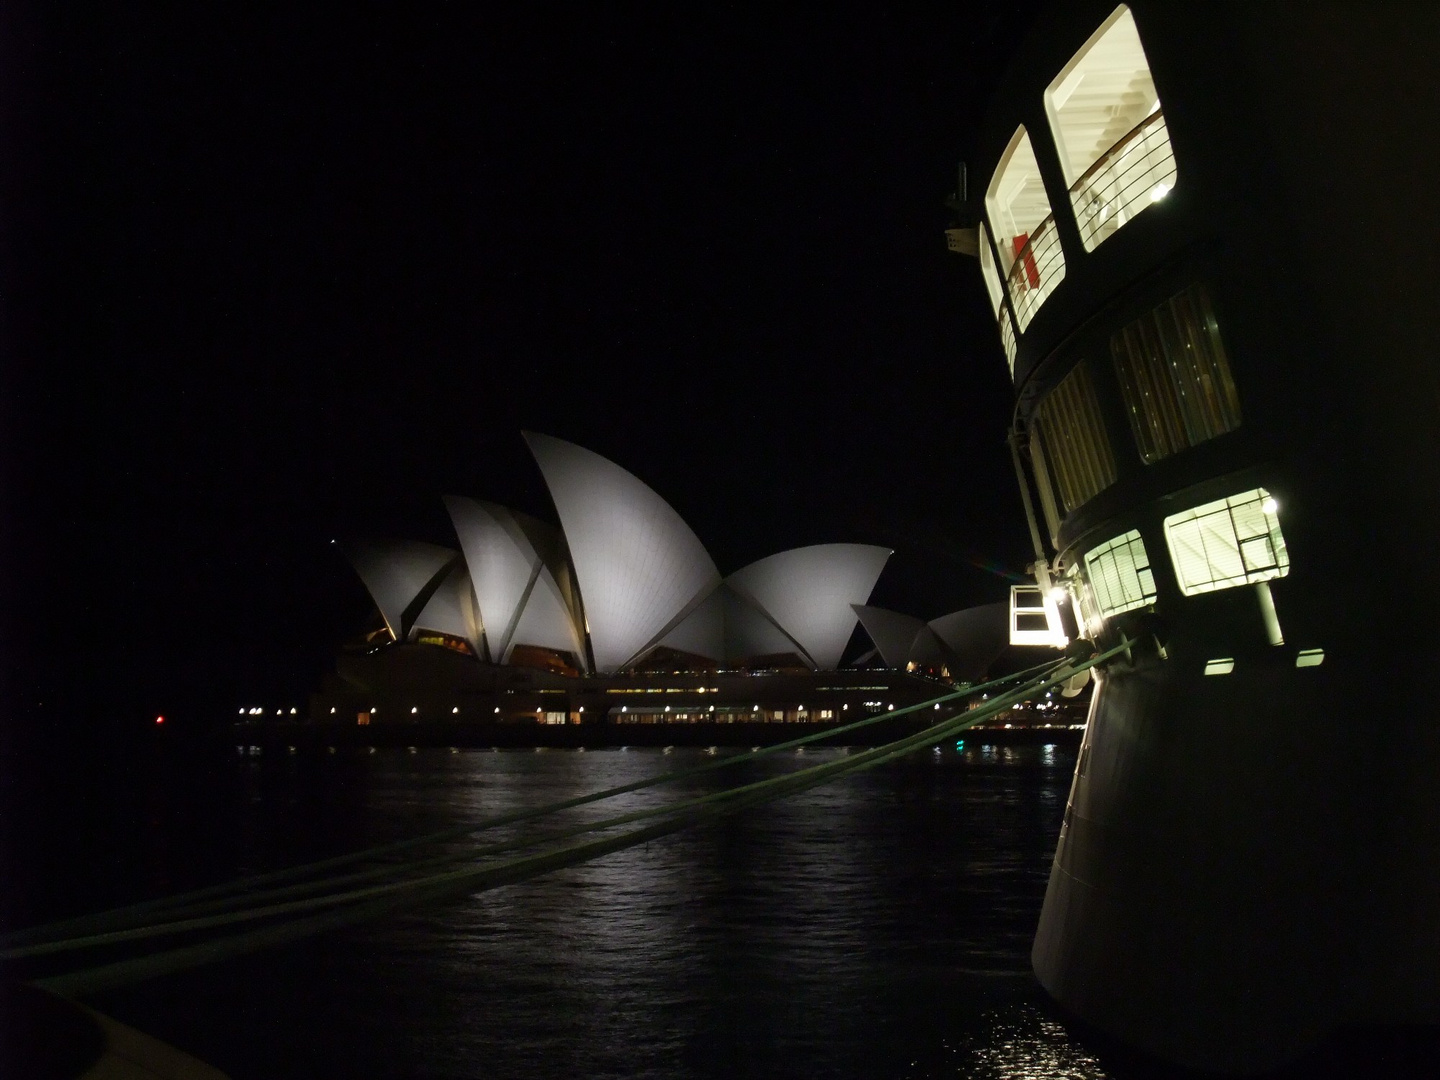 Opera House - Australia